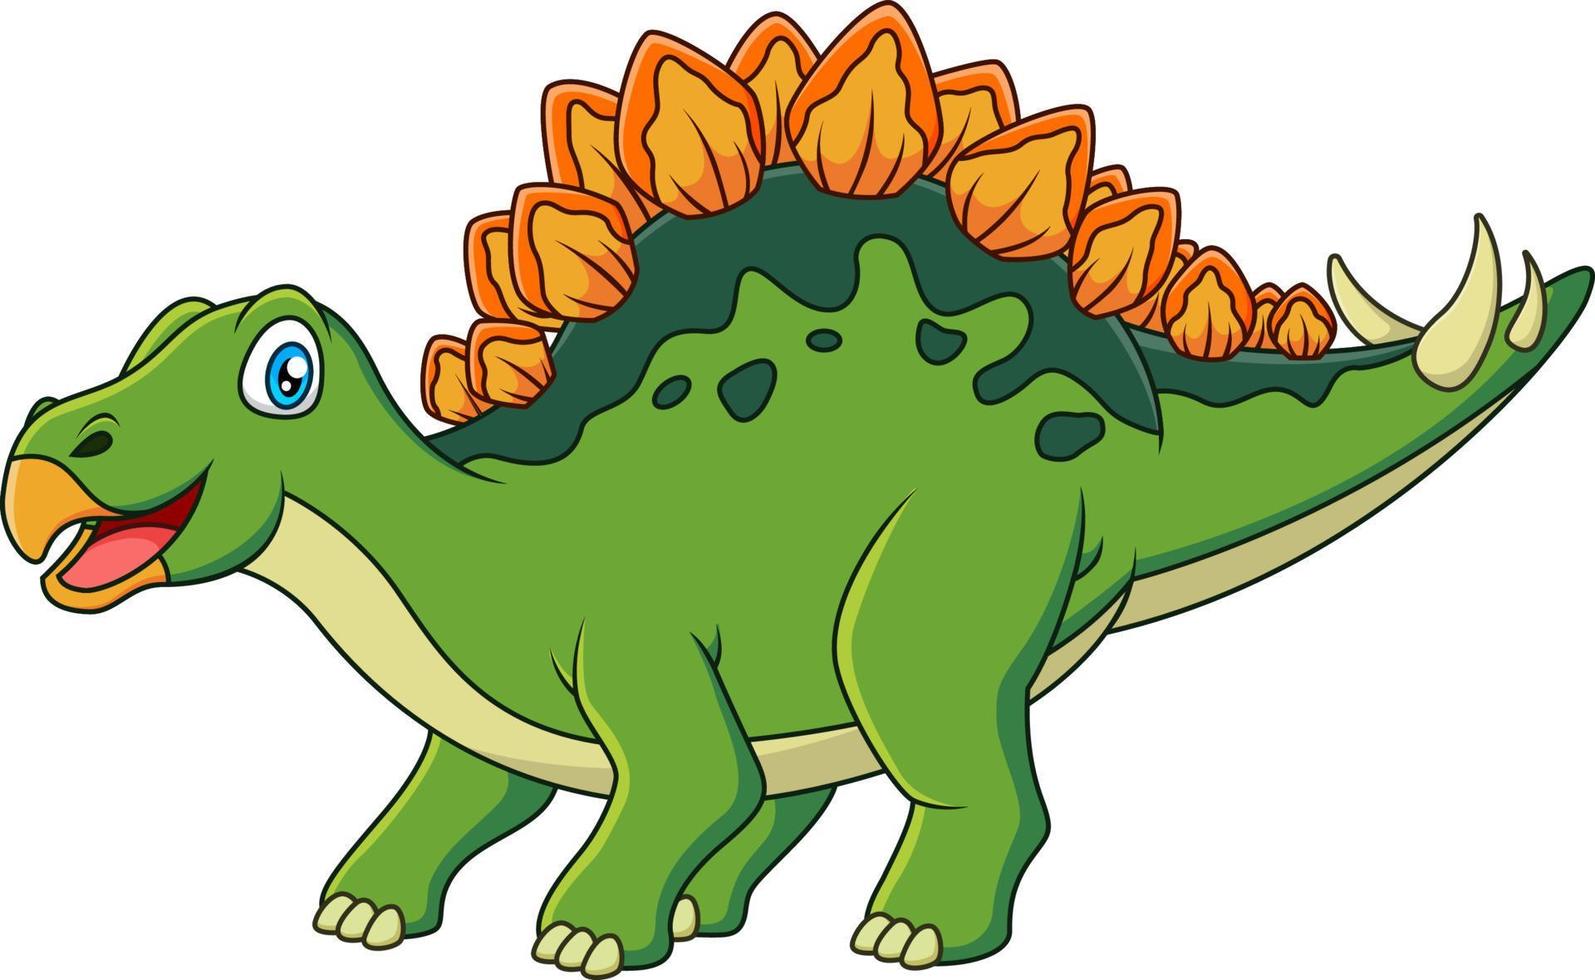 Cute and adorable stegosaurus cartoon vector